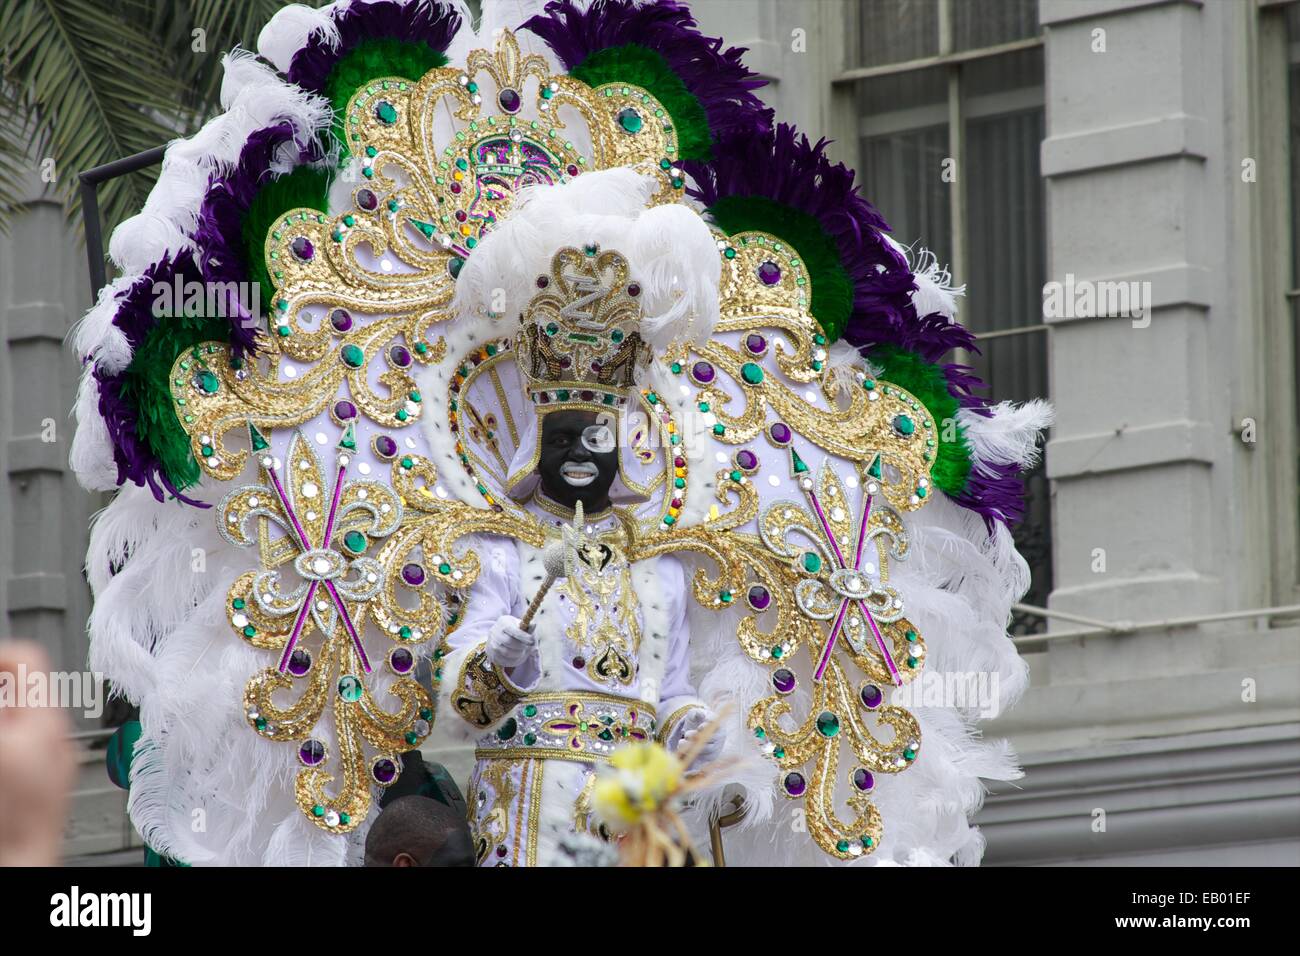 Gay Man Mardi Gras Pictures New Orleans La 57